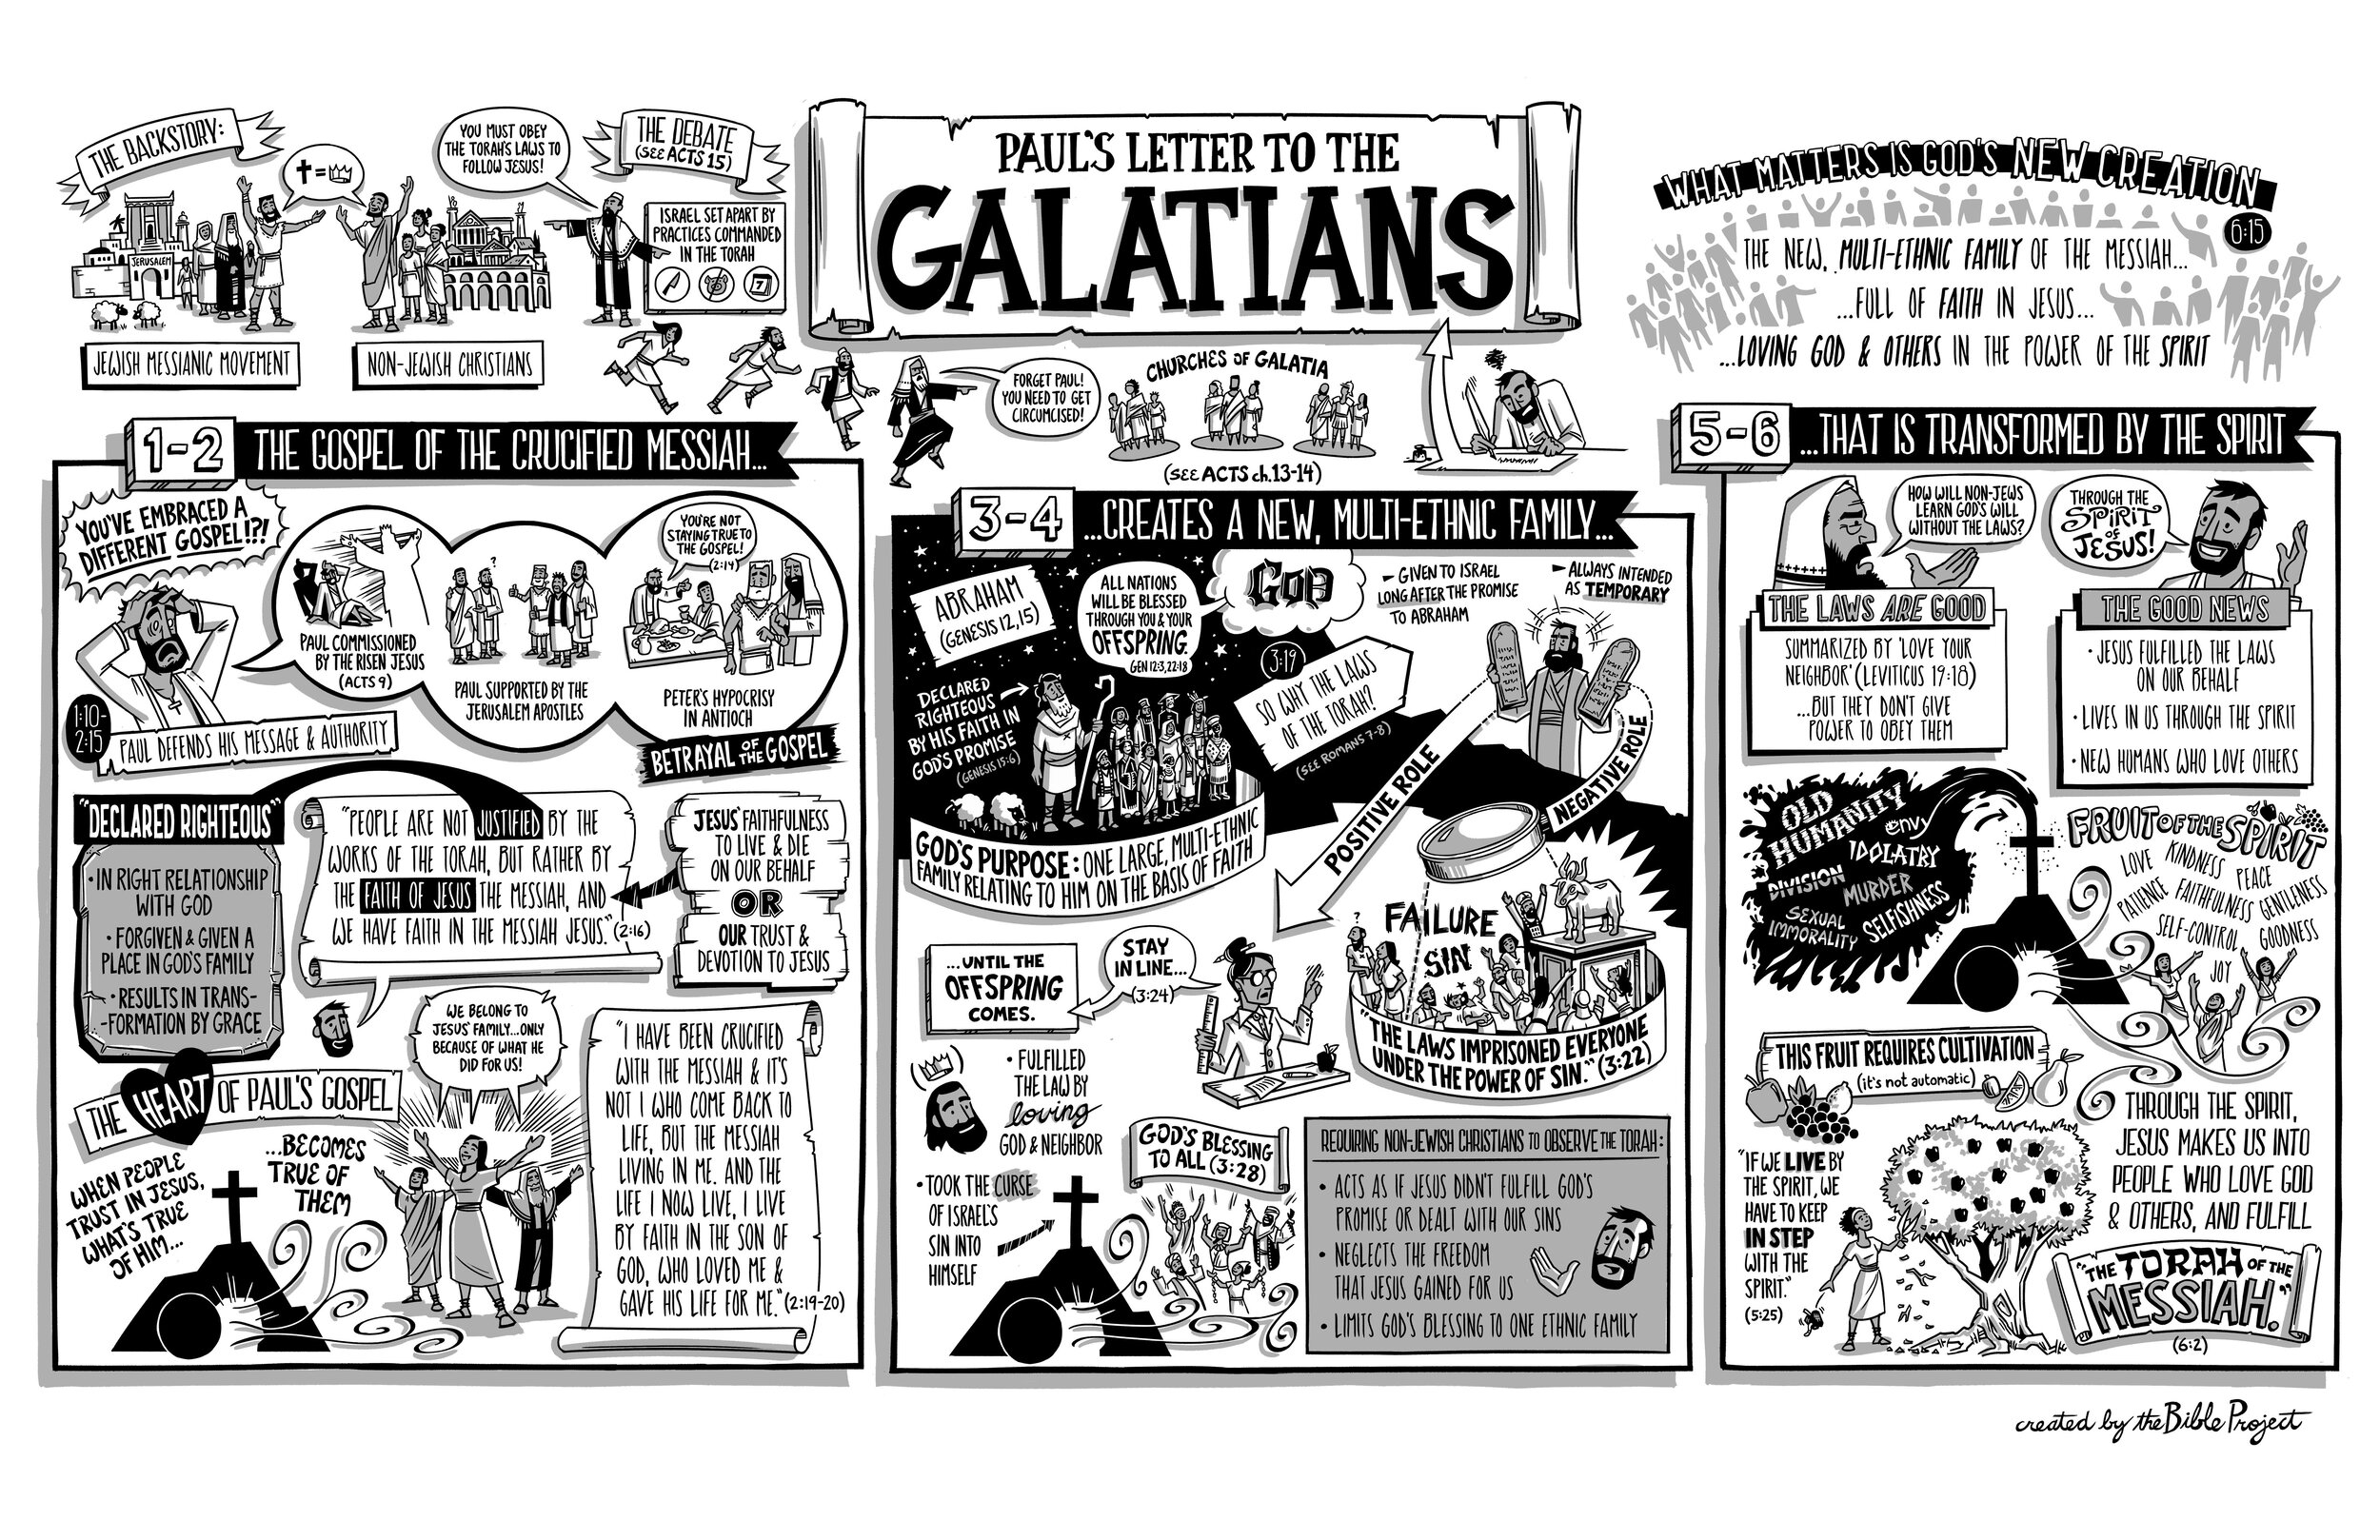 BibleProject: Galatians (Video)